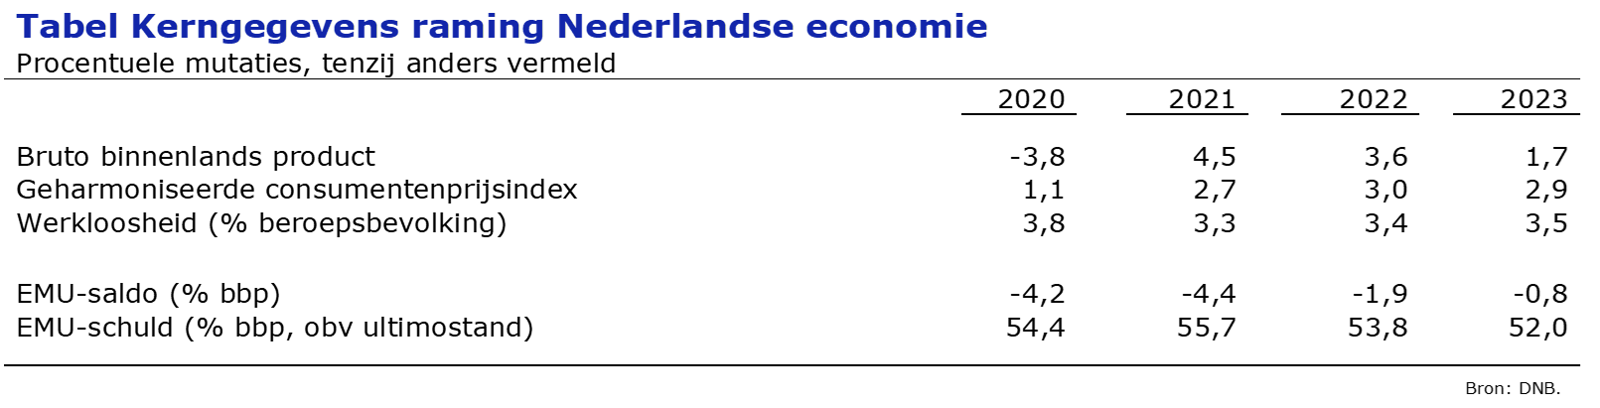 Tabel Kerngegevens raming Nederlandse economie